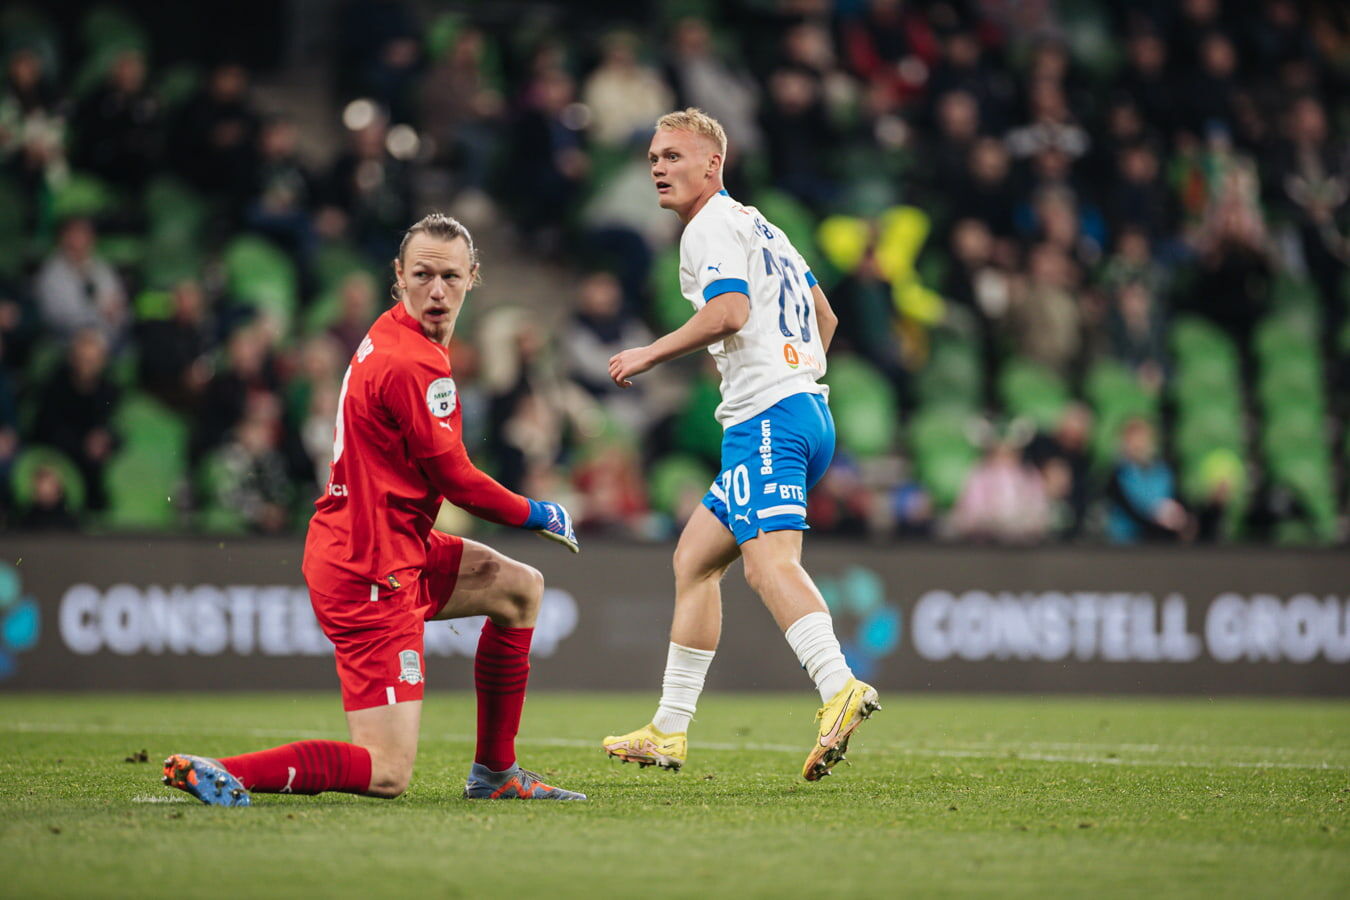 Photo gallery from RPL away game at Krasnodar